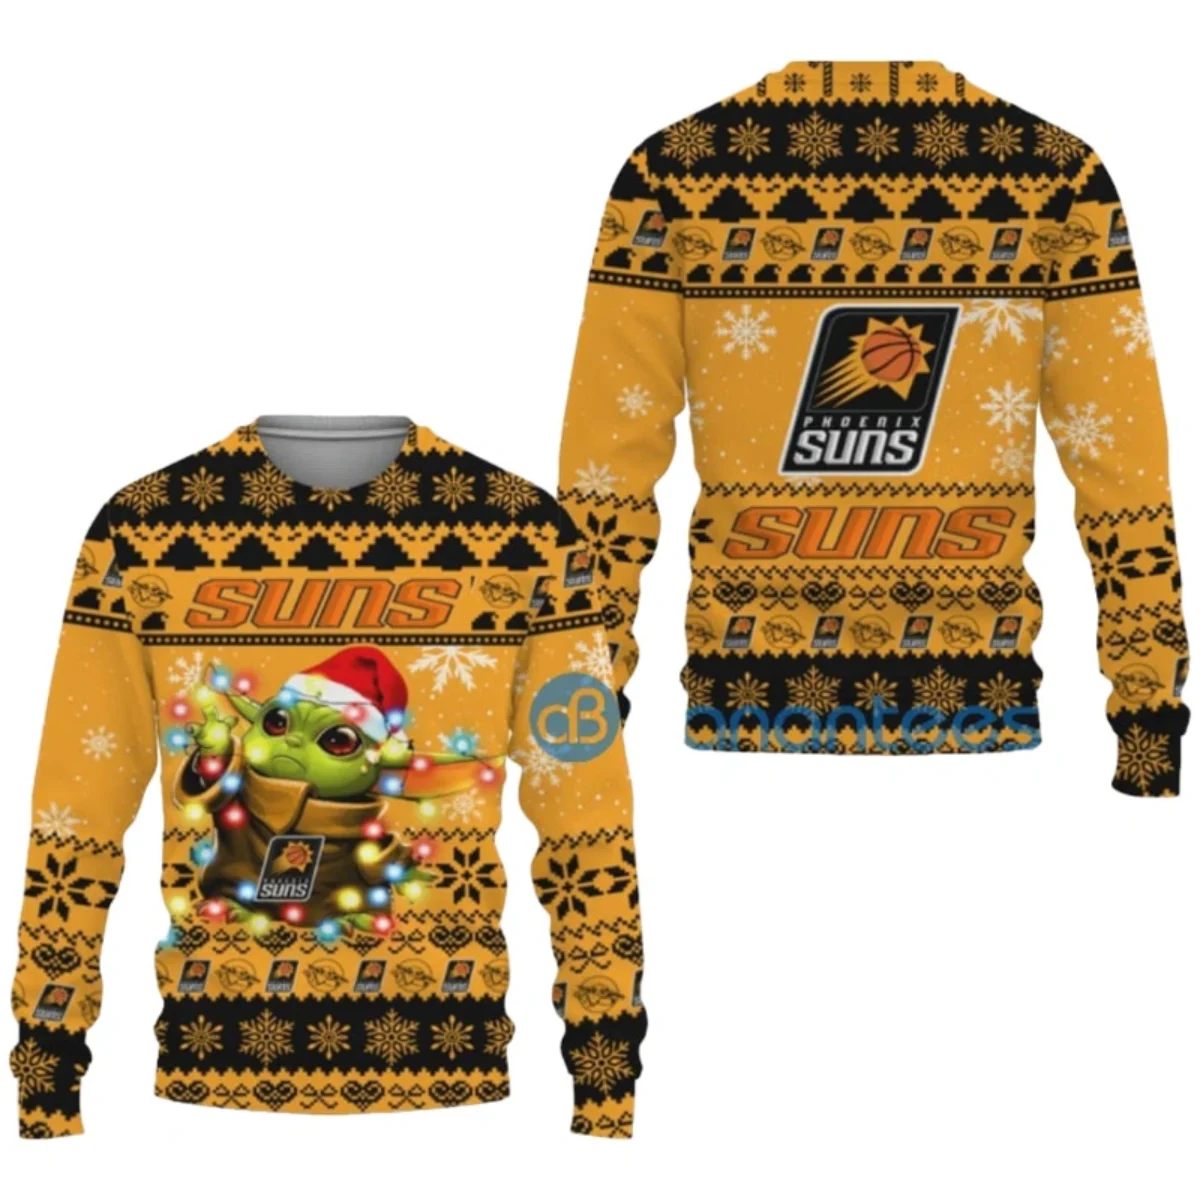 Toronto Raptors Ugly Christmas Sweater - Peto Rugs